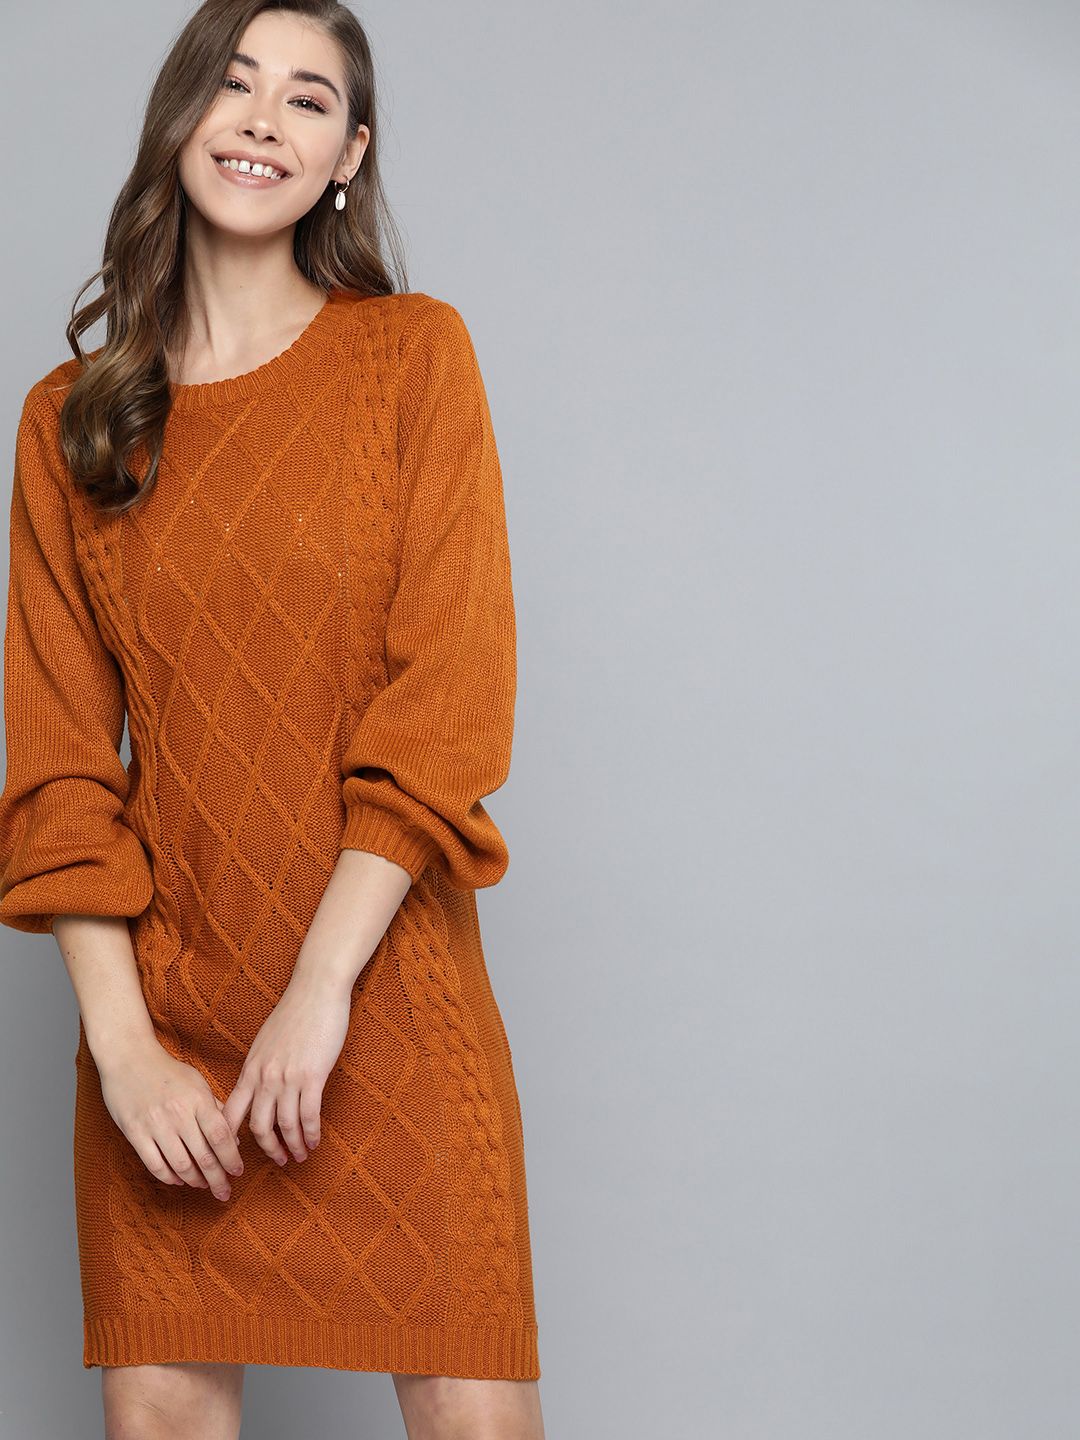 Mast & Harbour Women Rust Orange Cable Knit Winter Sheath Dress Price in India